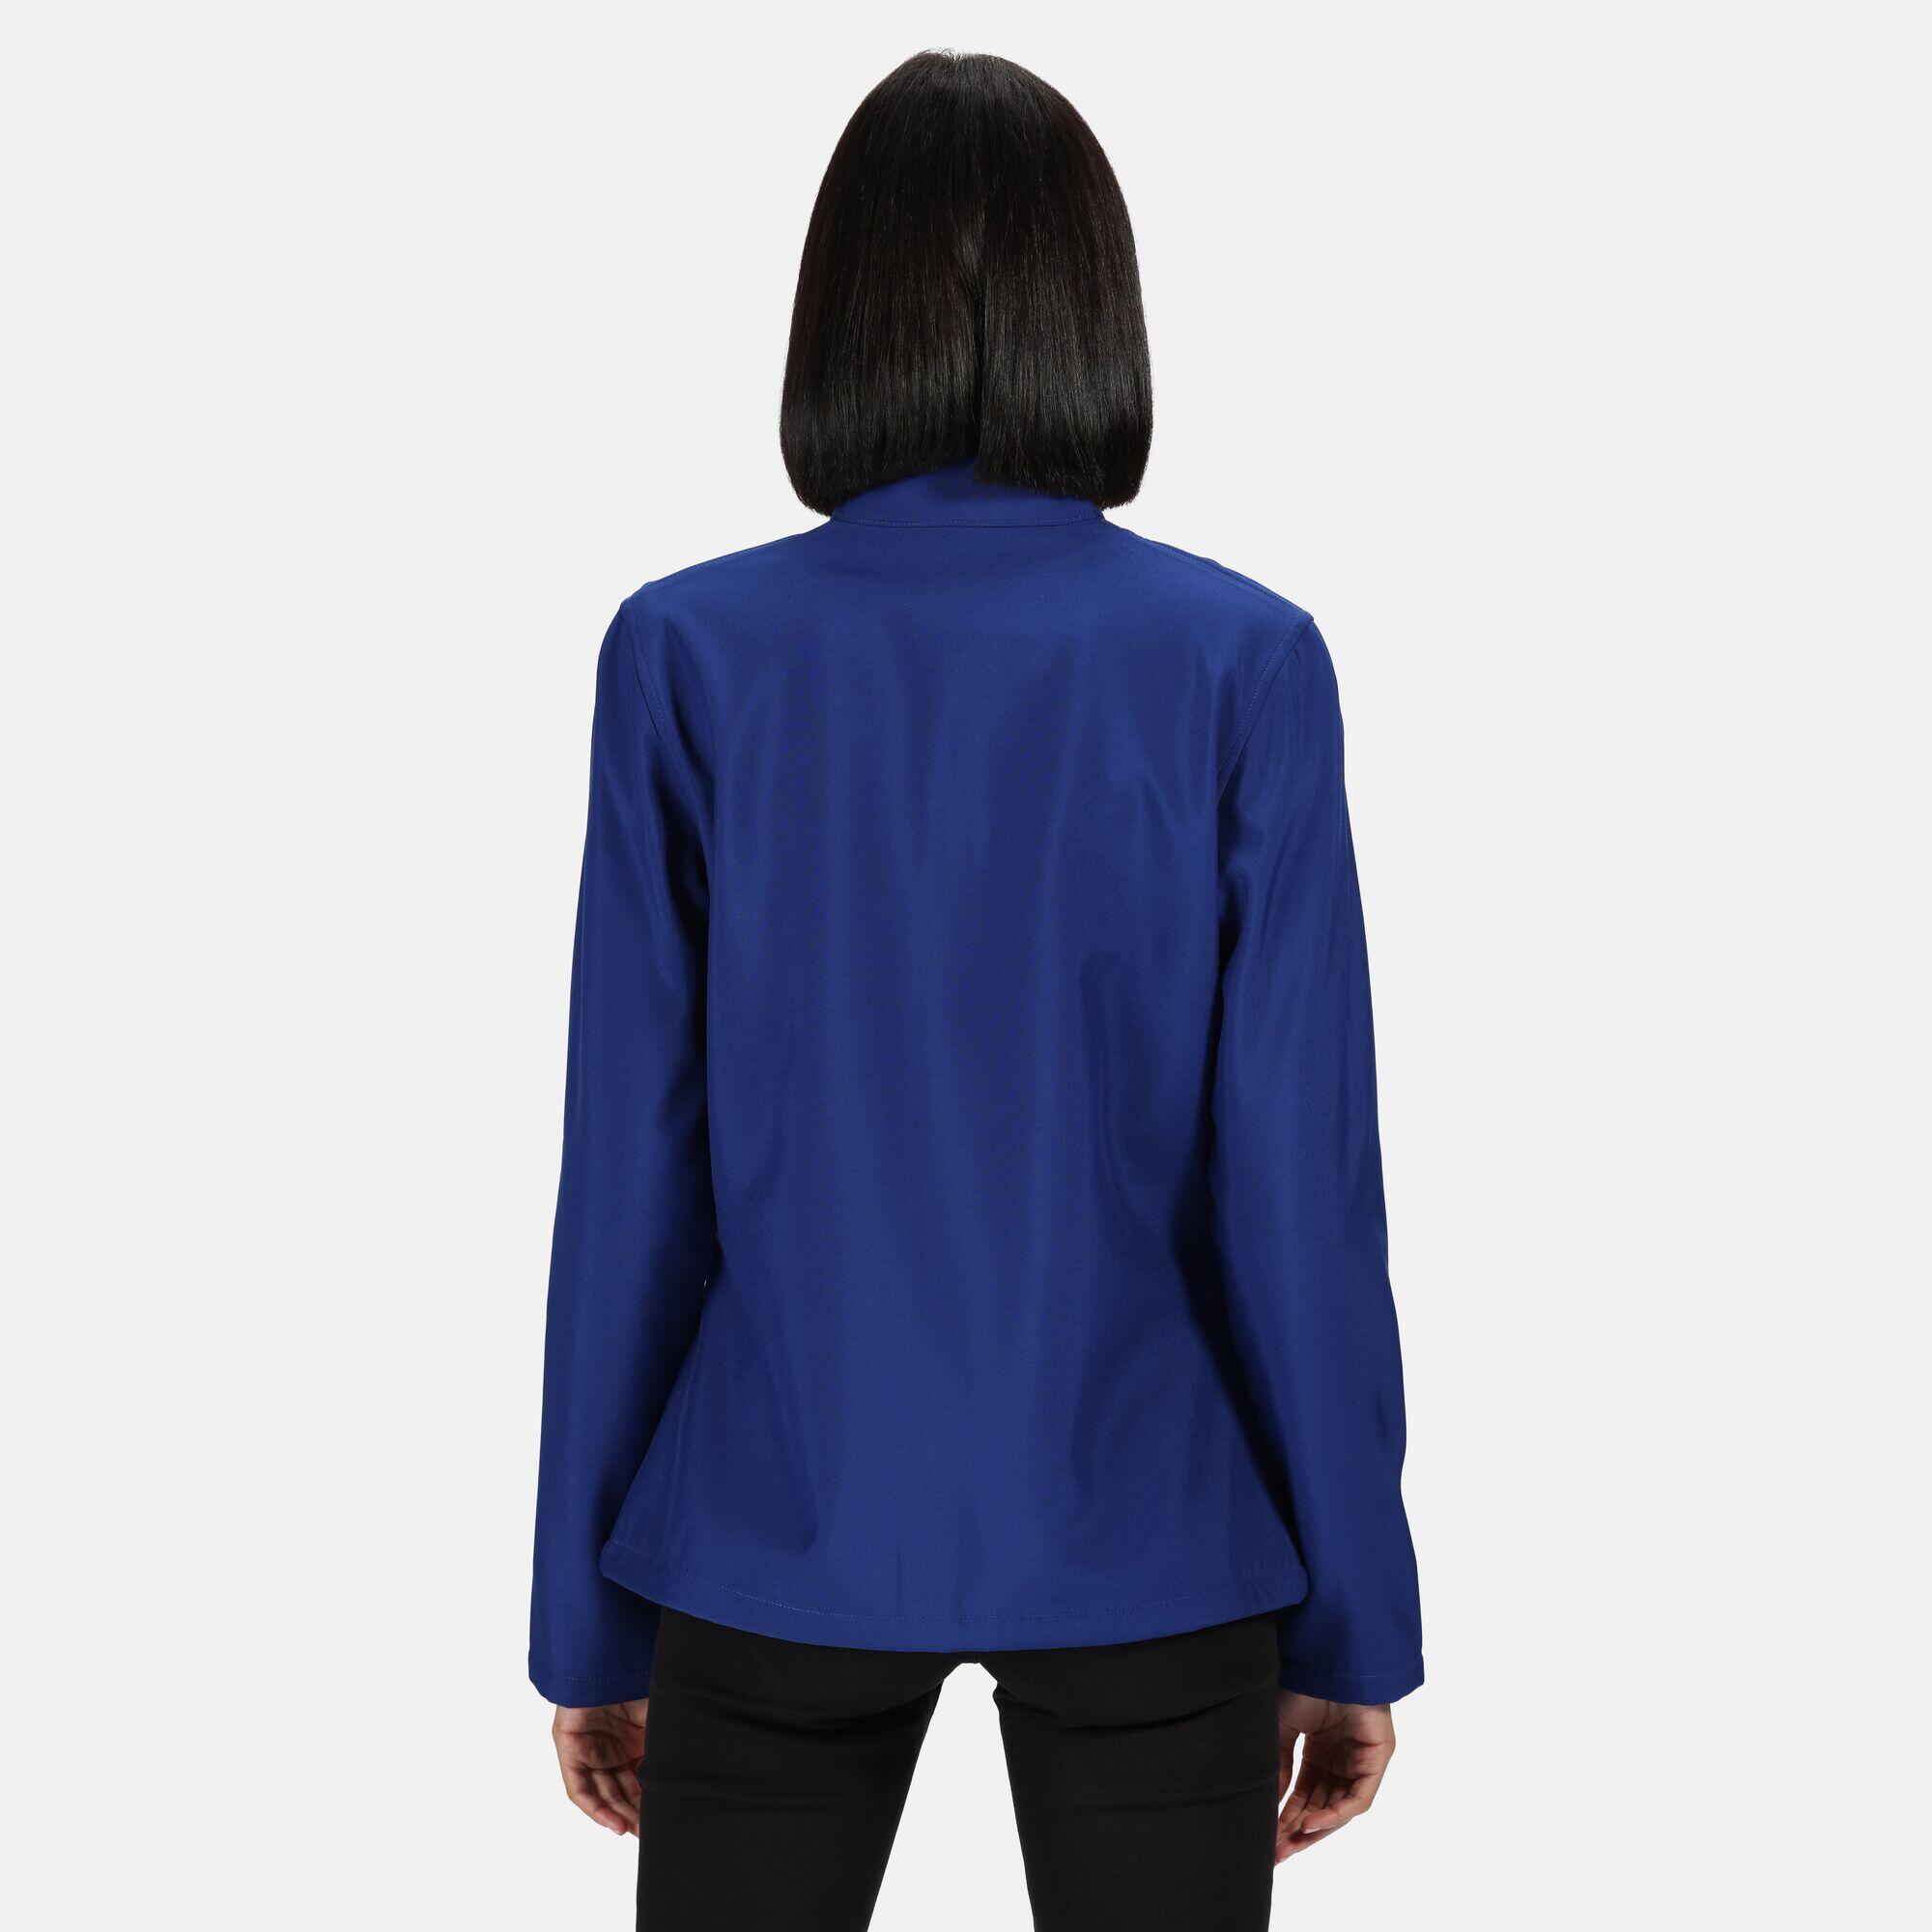 Standout Womens/Ladies Ablaze Printable Soft Shell Jacket (Royal Blue/Black) 2/5